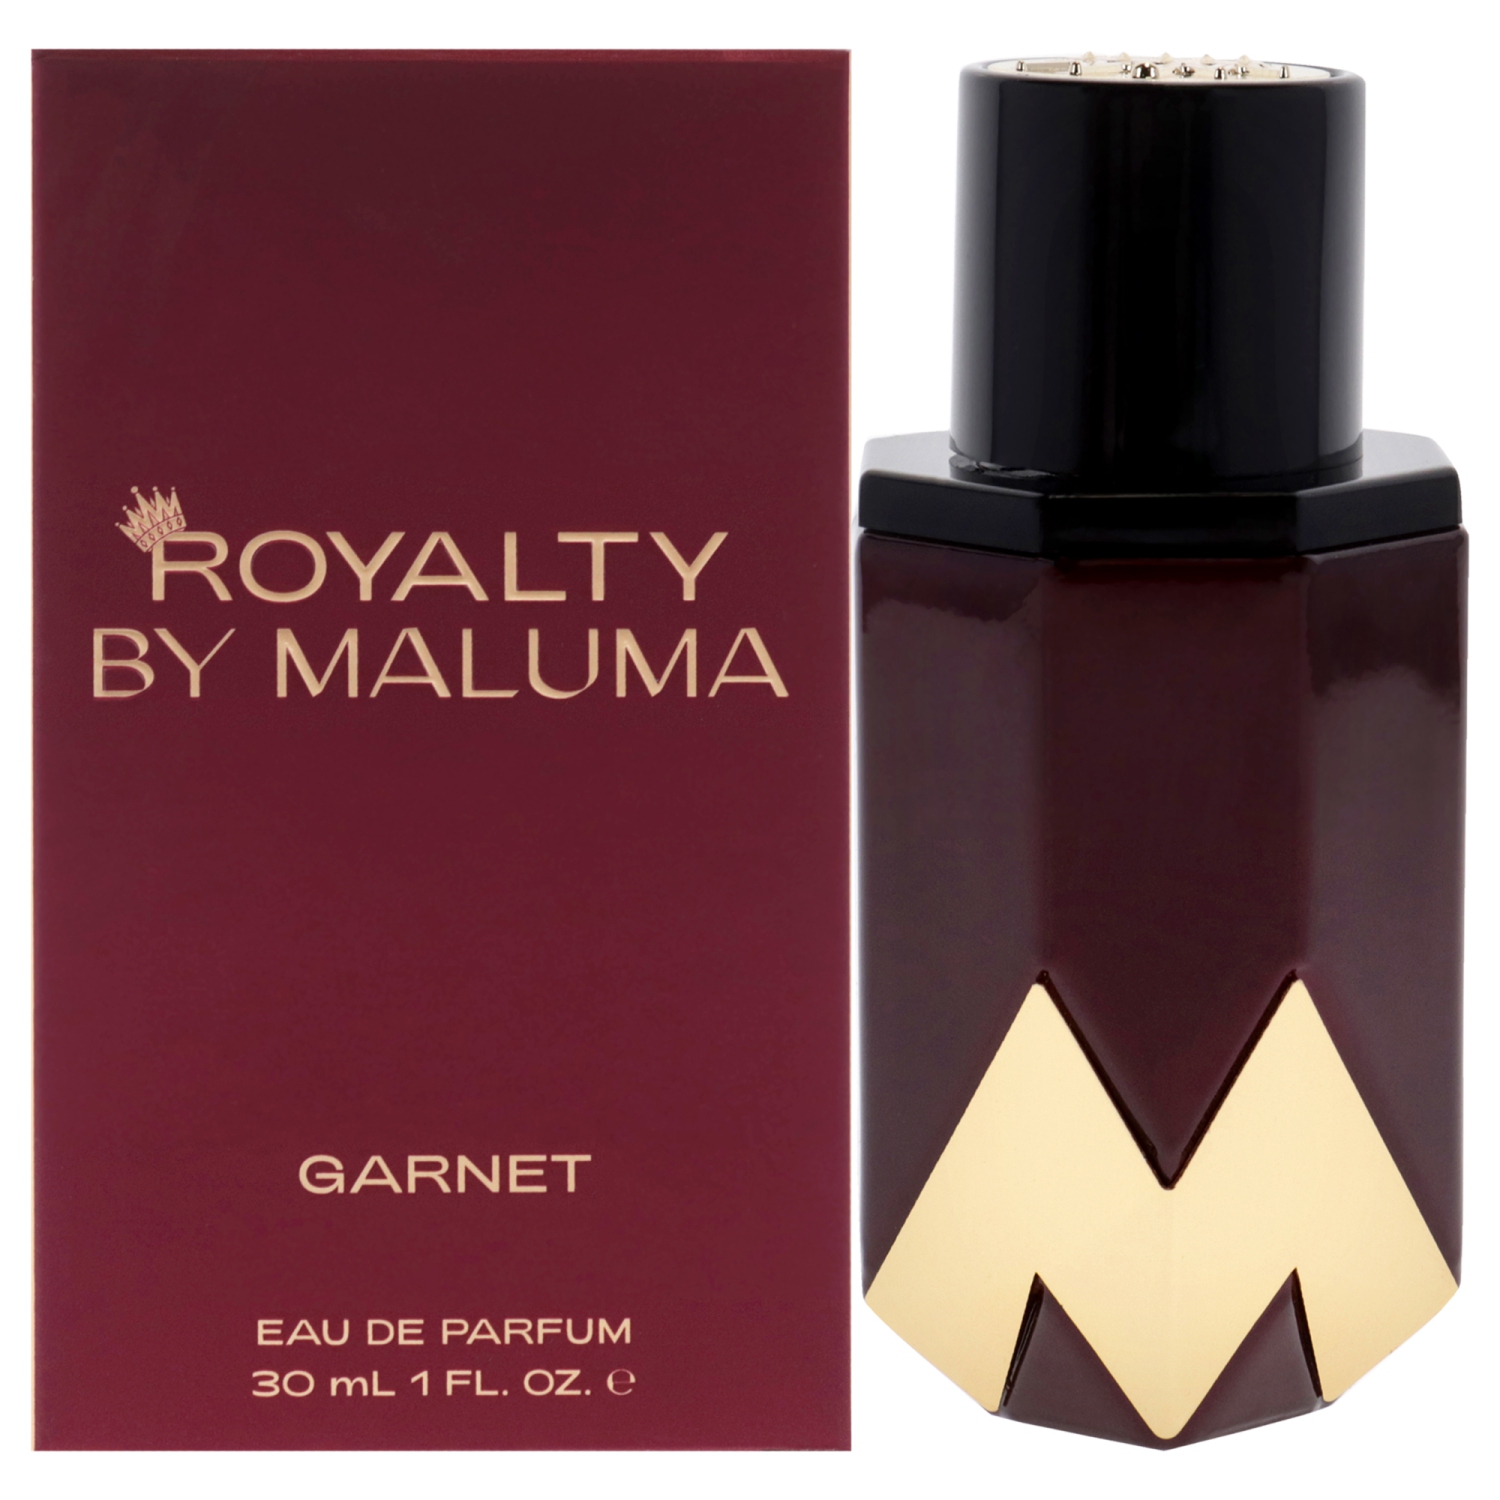 Discover ROYALTY BY MALUMA Fragrances